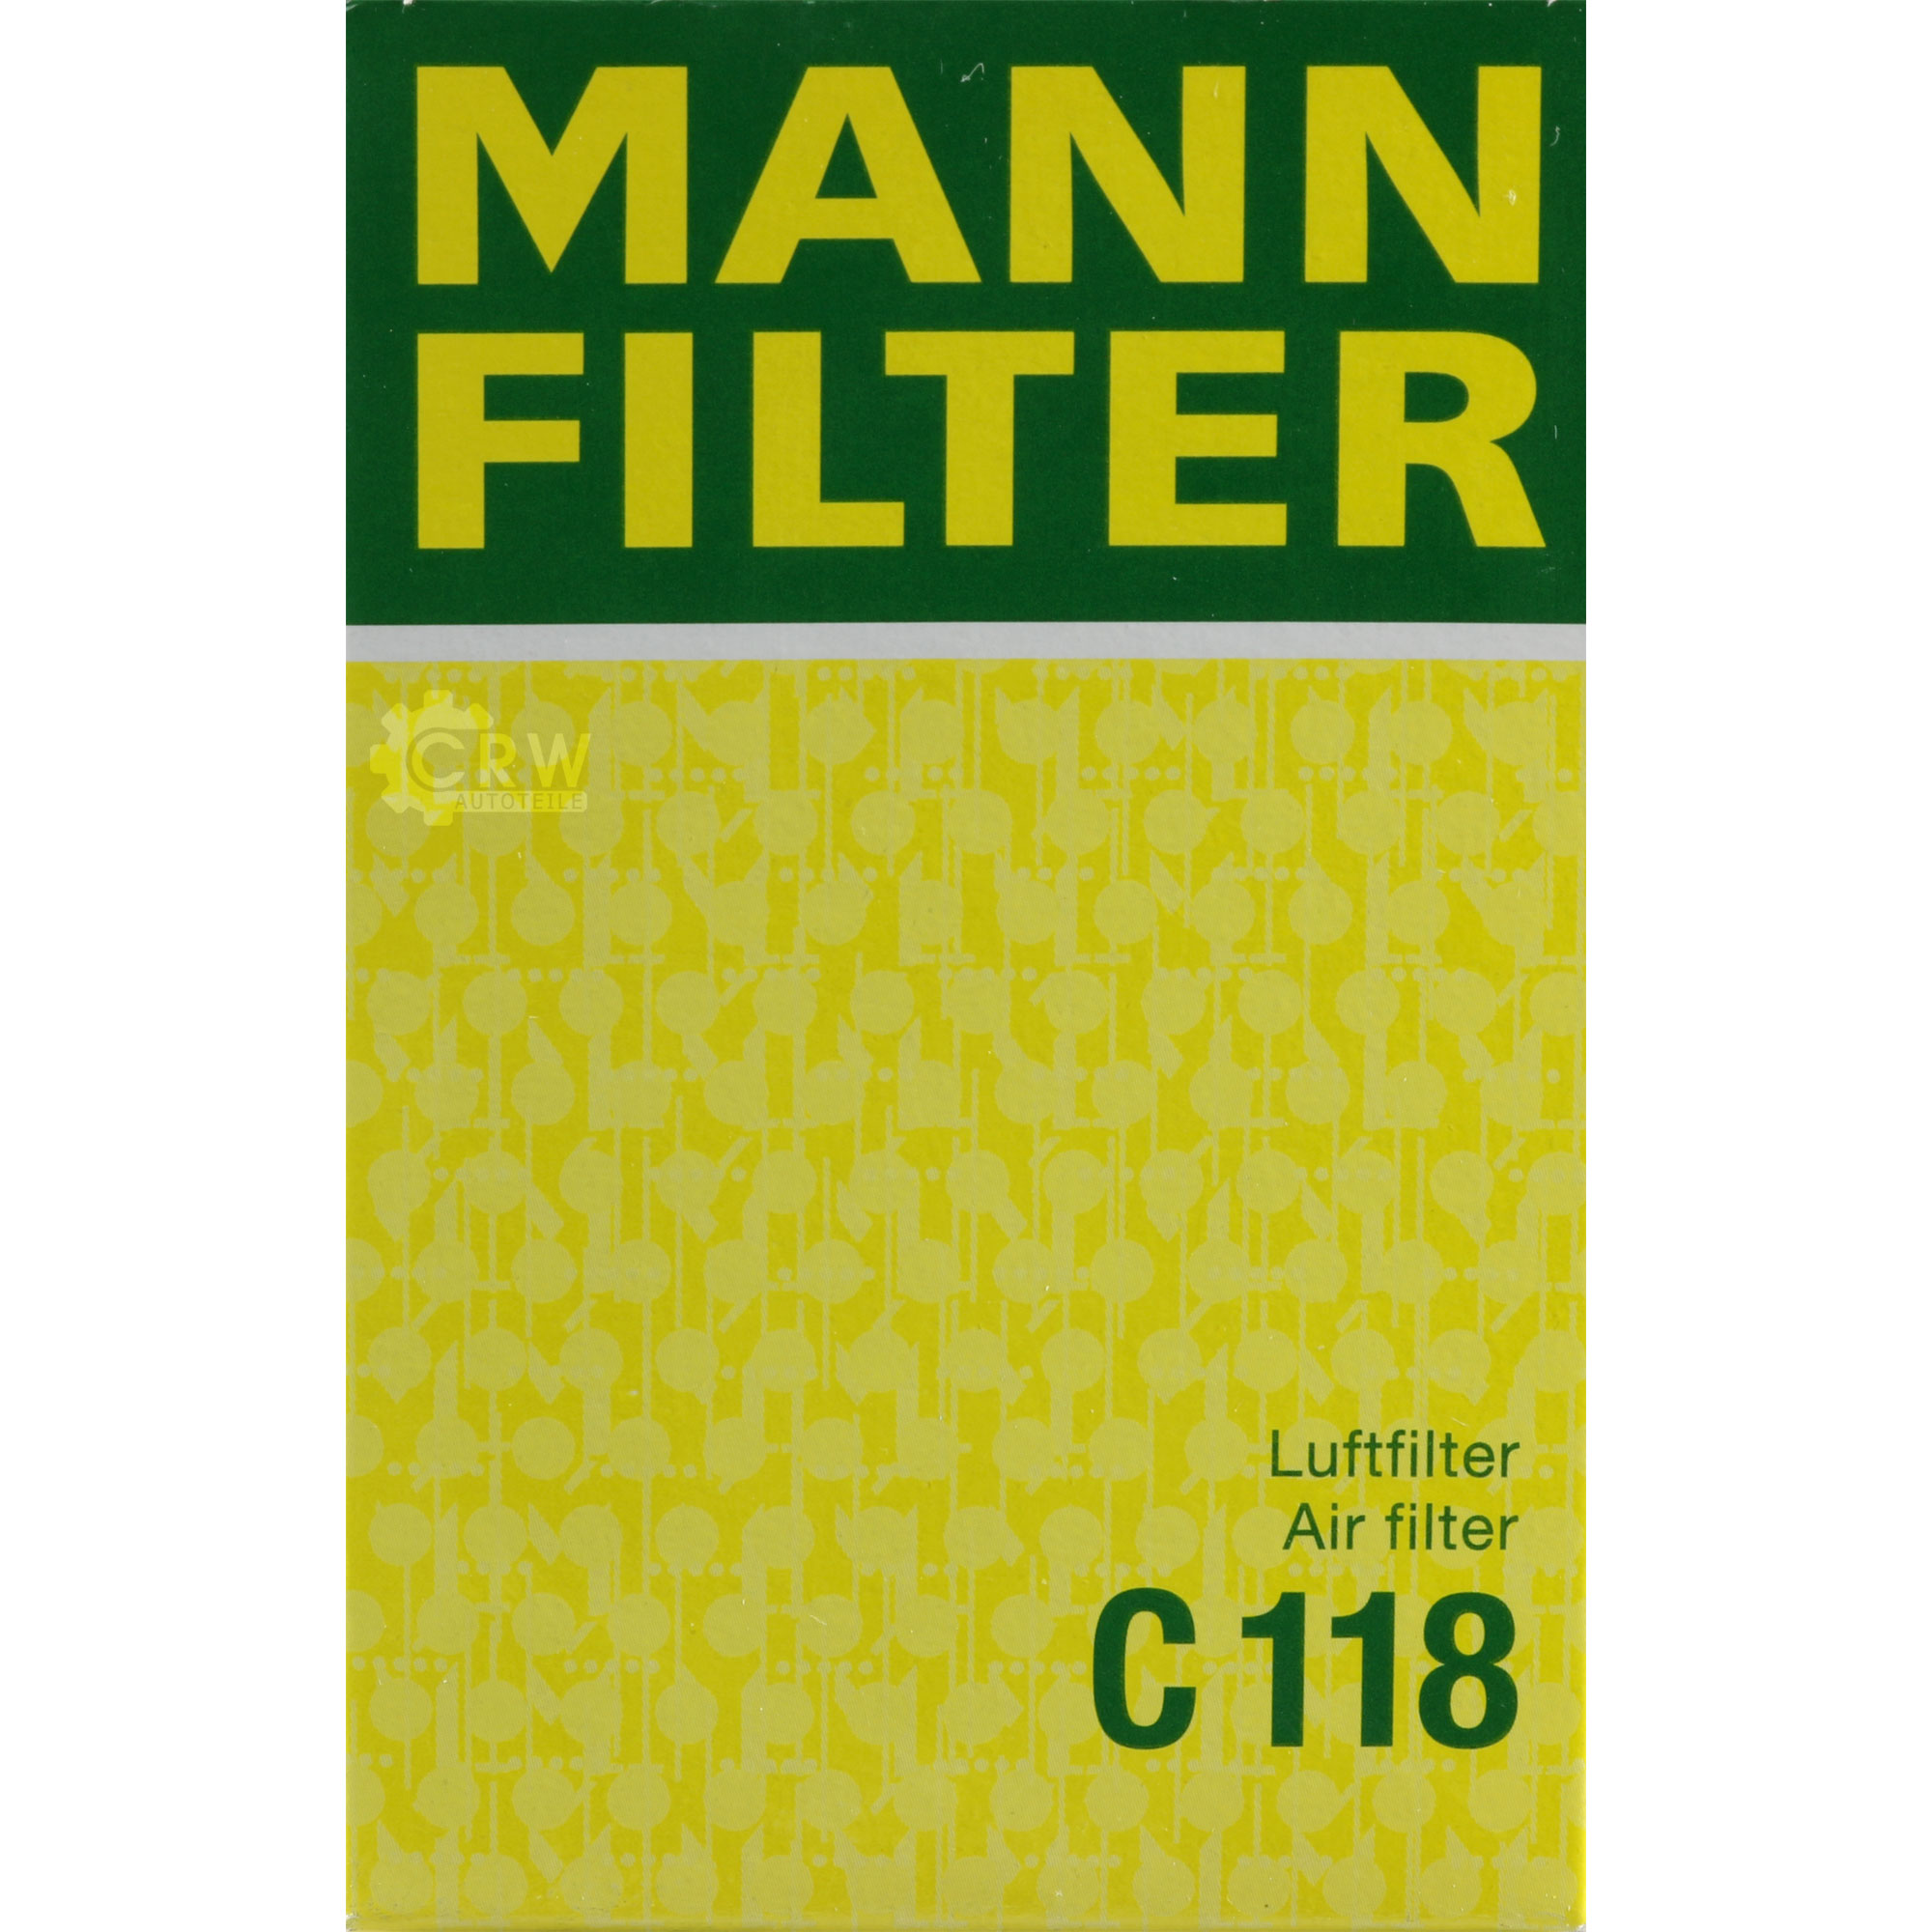 MANN-FILTER Filter Kurbelgehäuseentlüftung für Mercedes-Benz S-Klasse W126